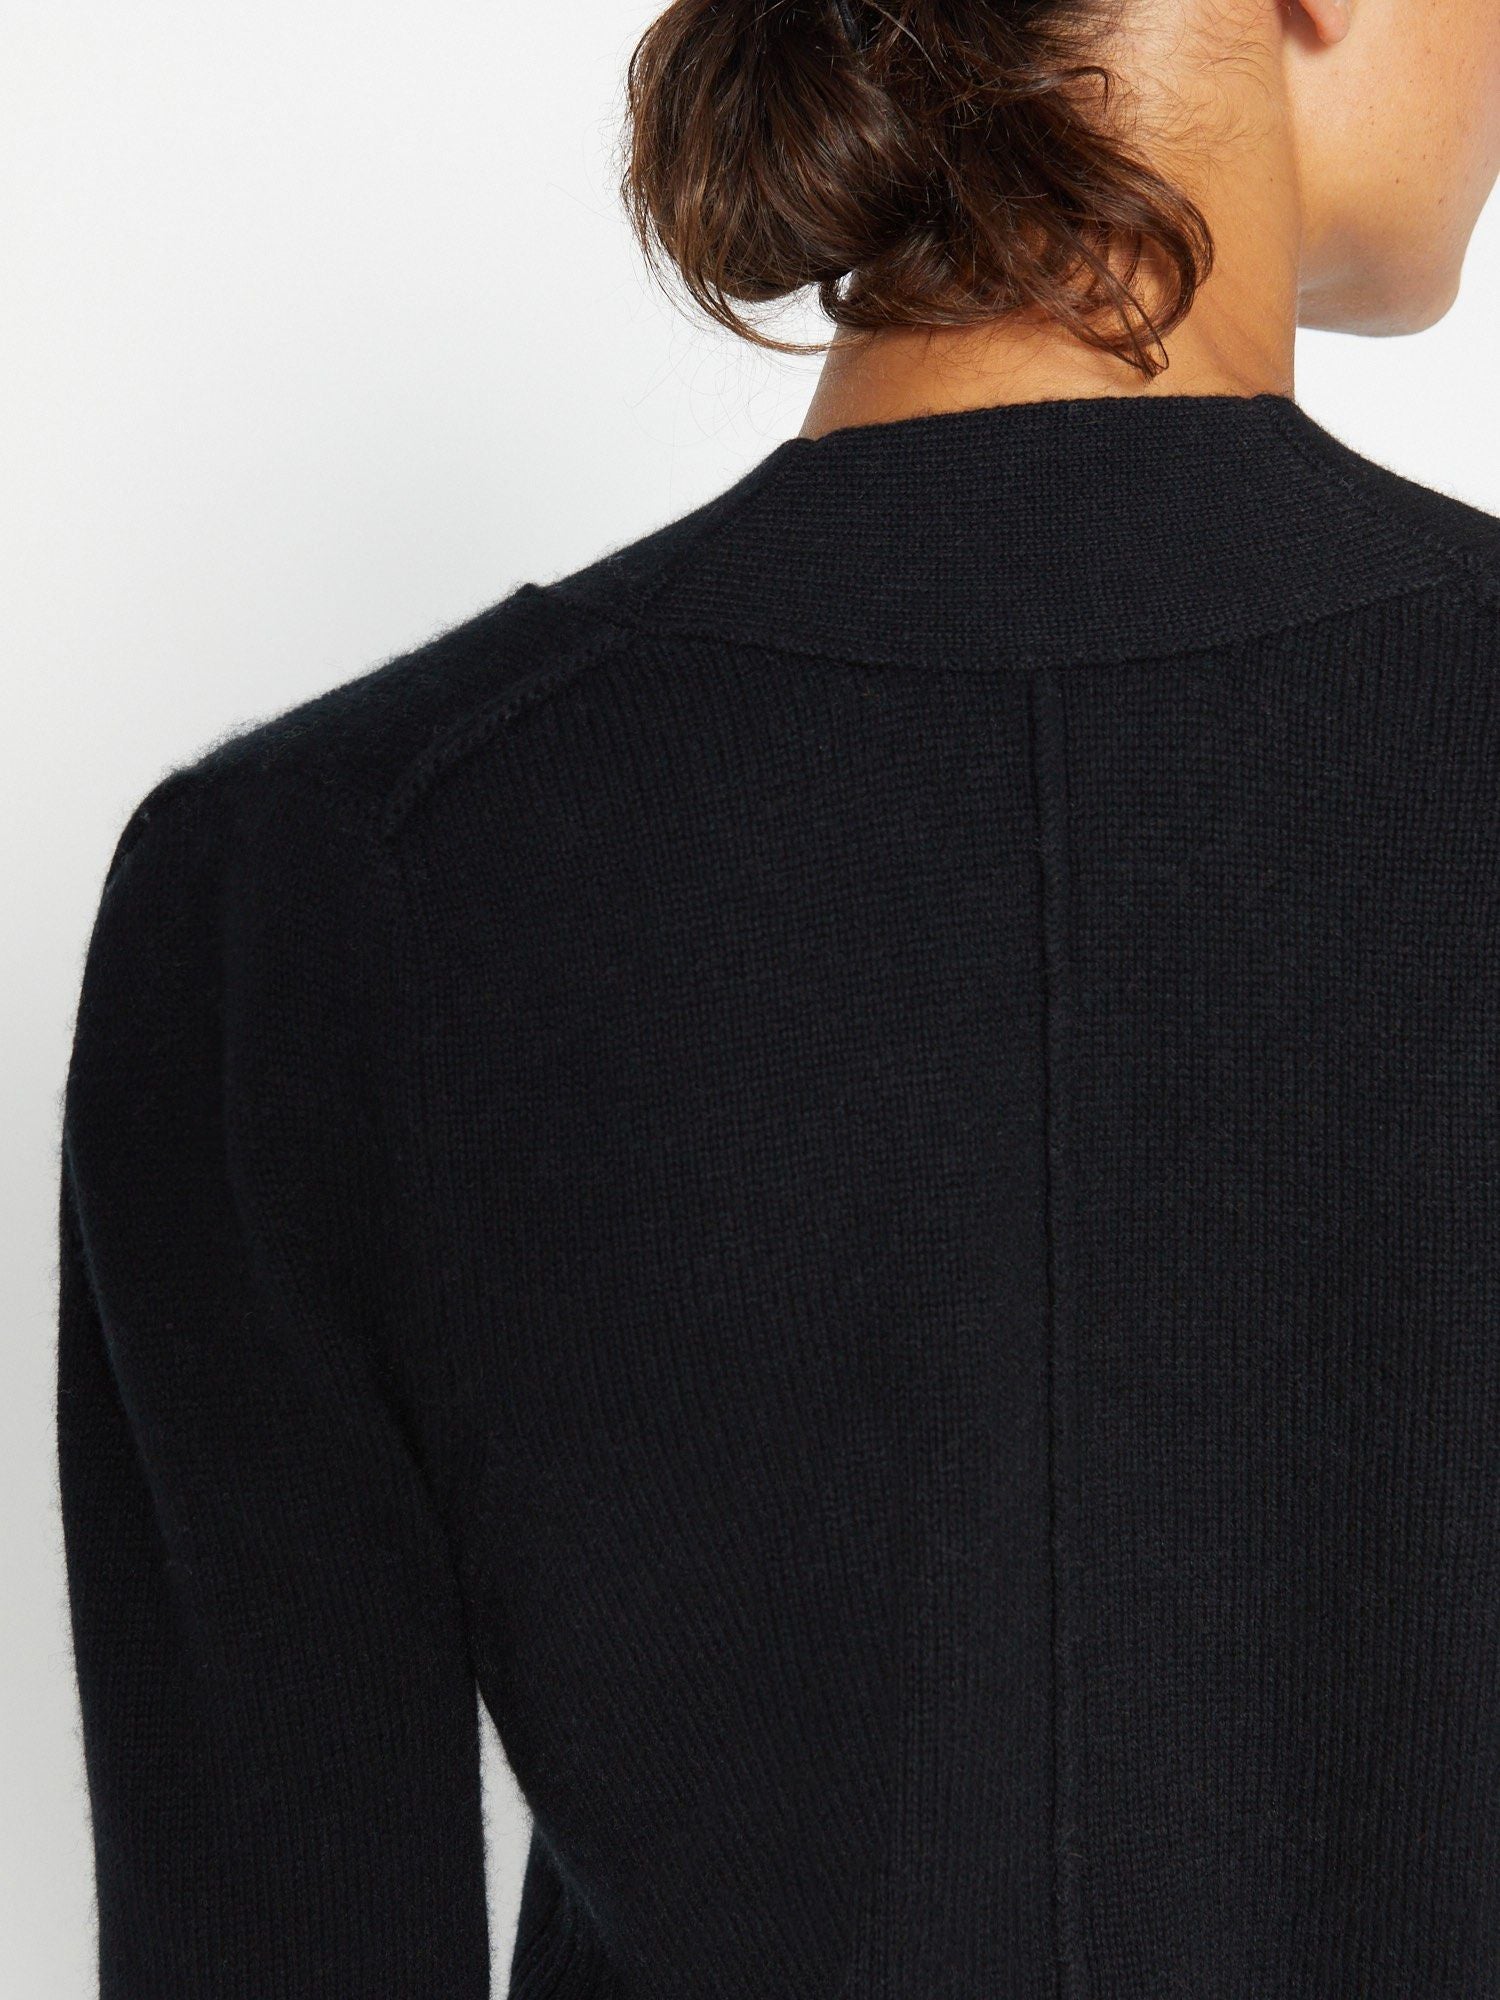 Lucie black layered three-quarter sleeve v-neck sweater close up